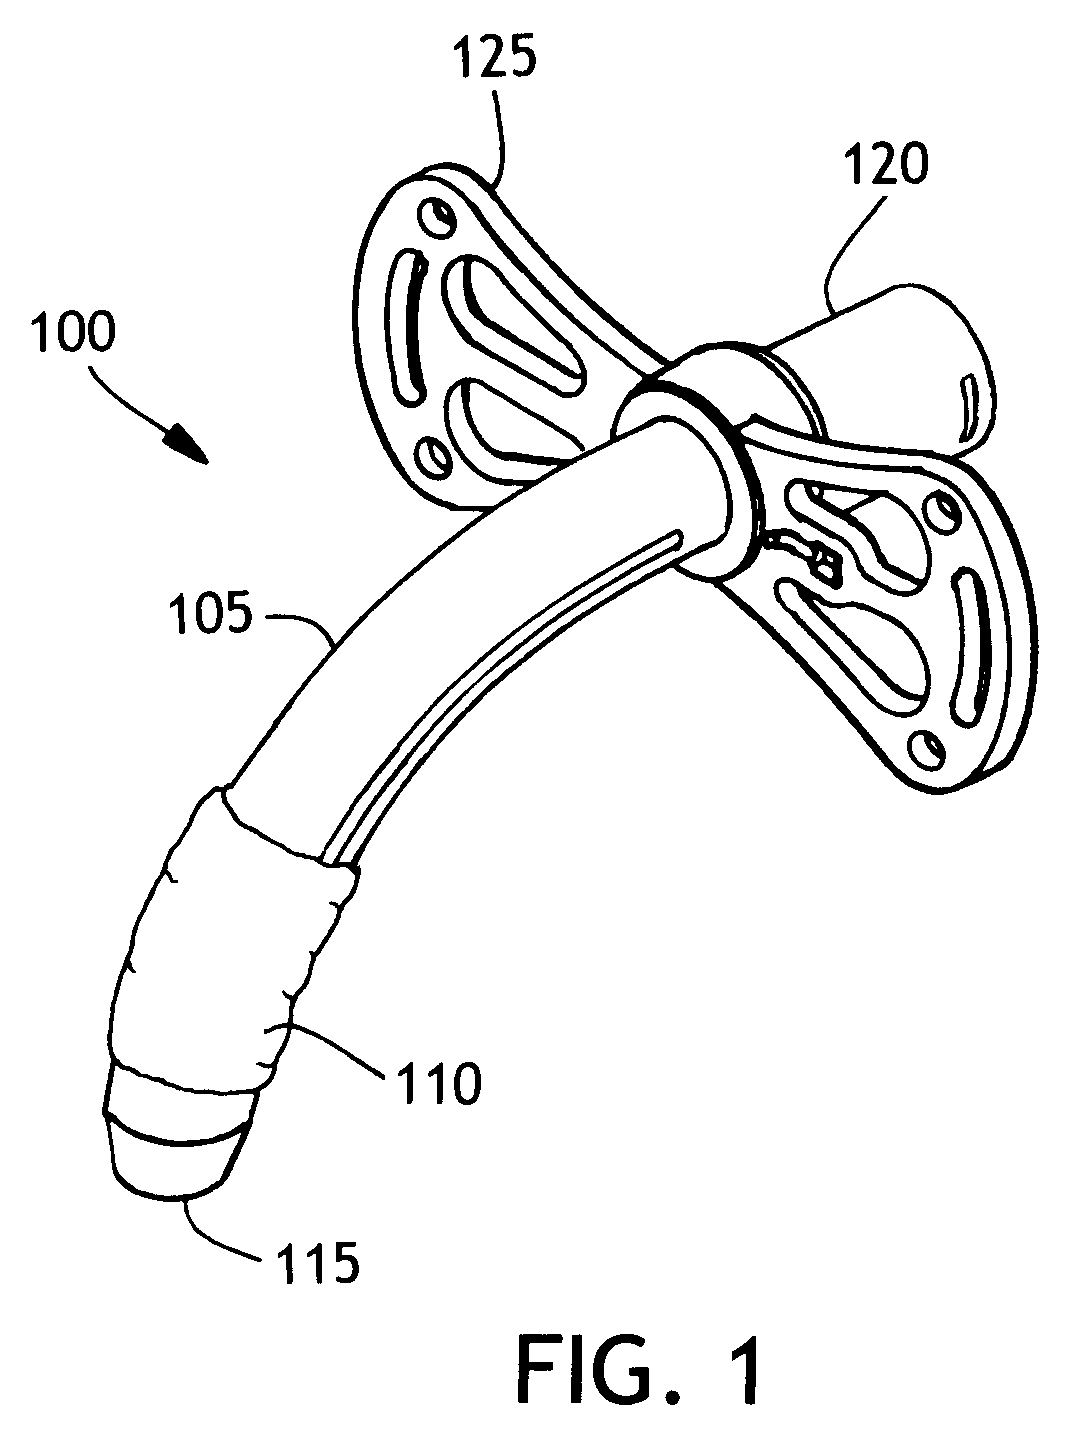 Method of making an improved balloon cuff tracheostomy tube